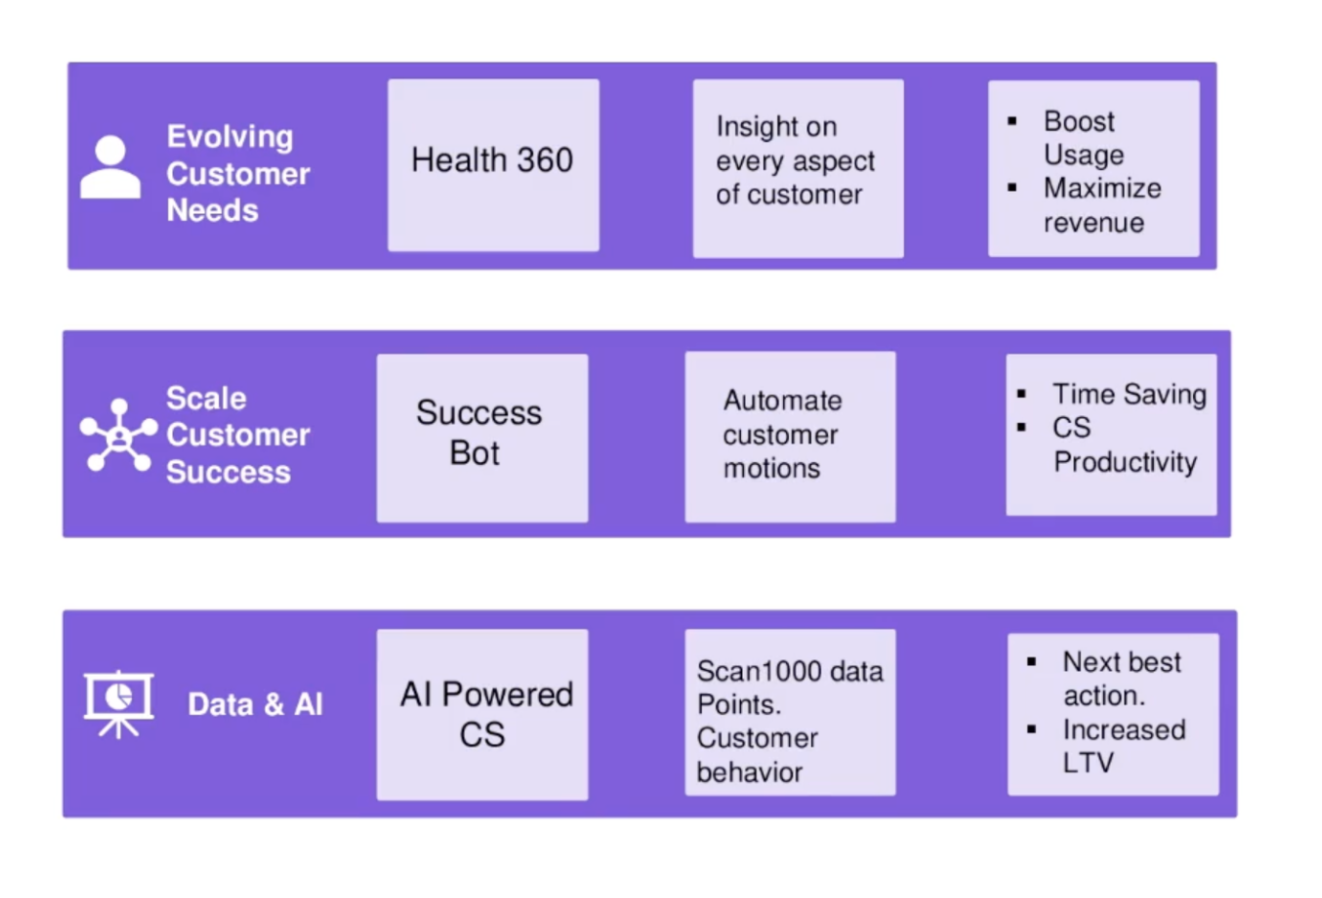 Evolving customer needs; scale customer success; data and AI